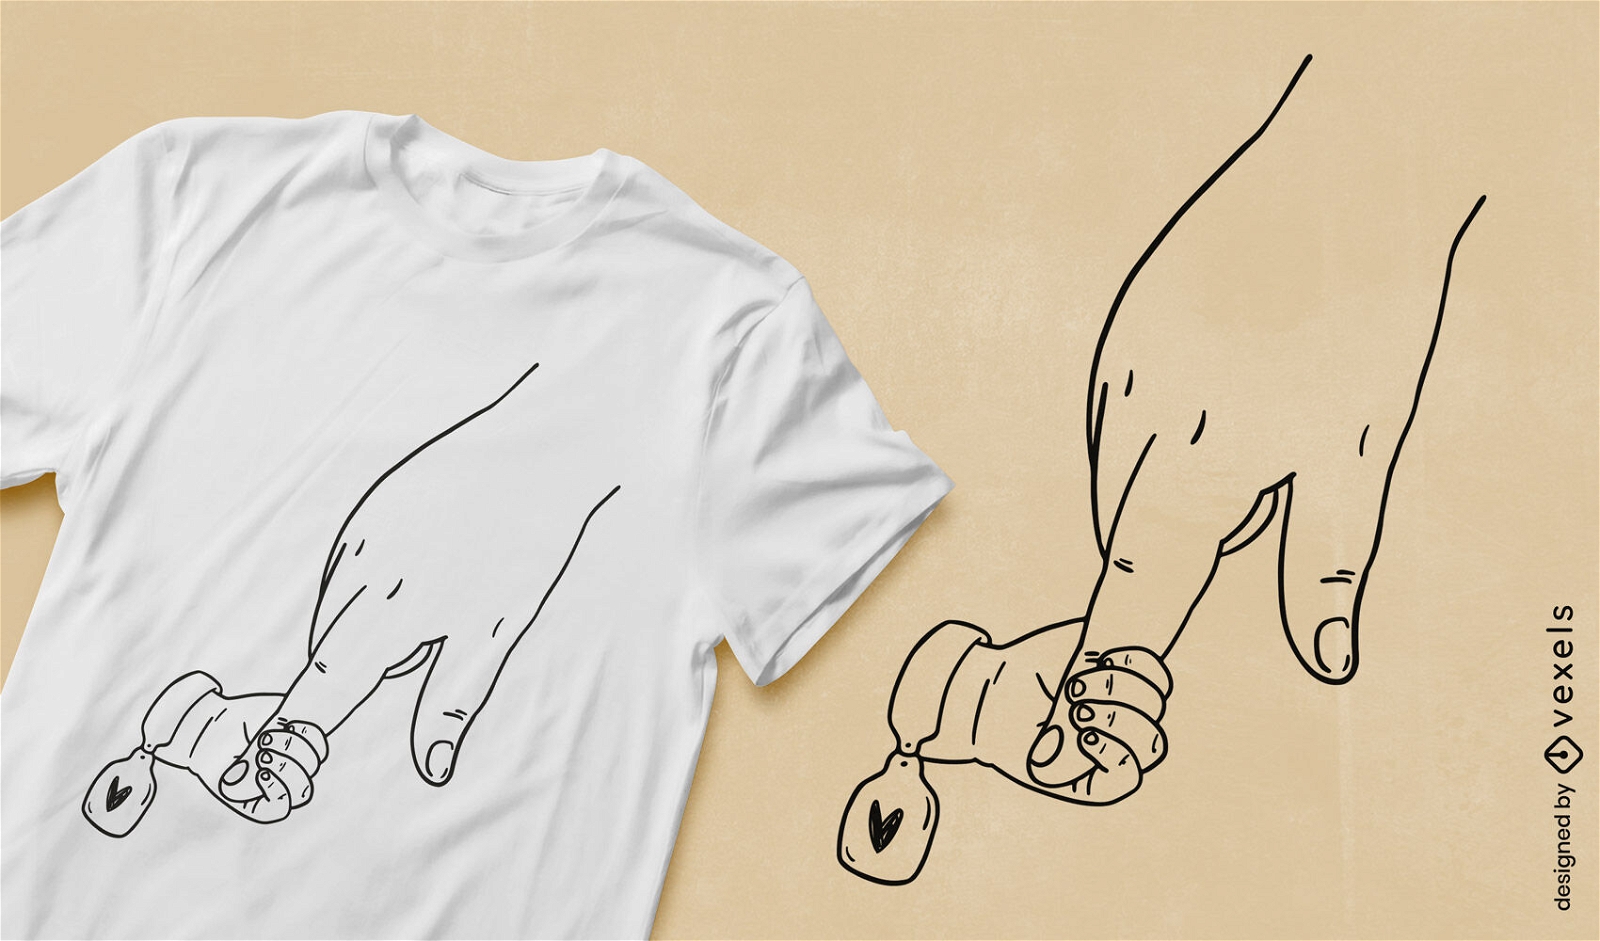 Gro?e Hand, die Babyhand-T-Shirt-Design h?lt